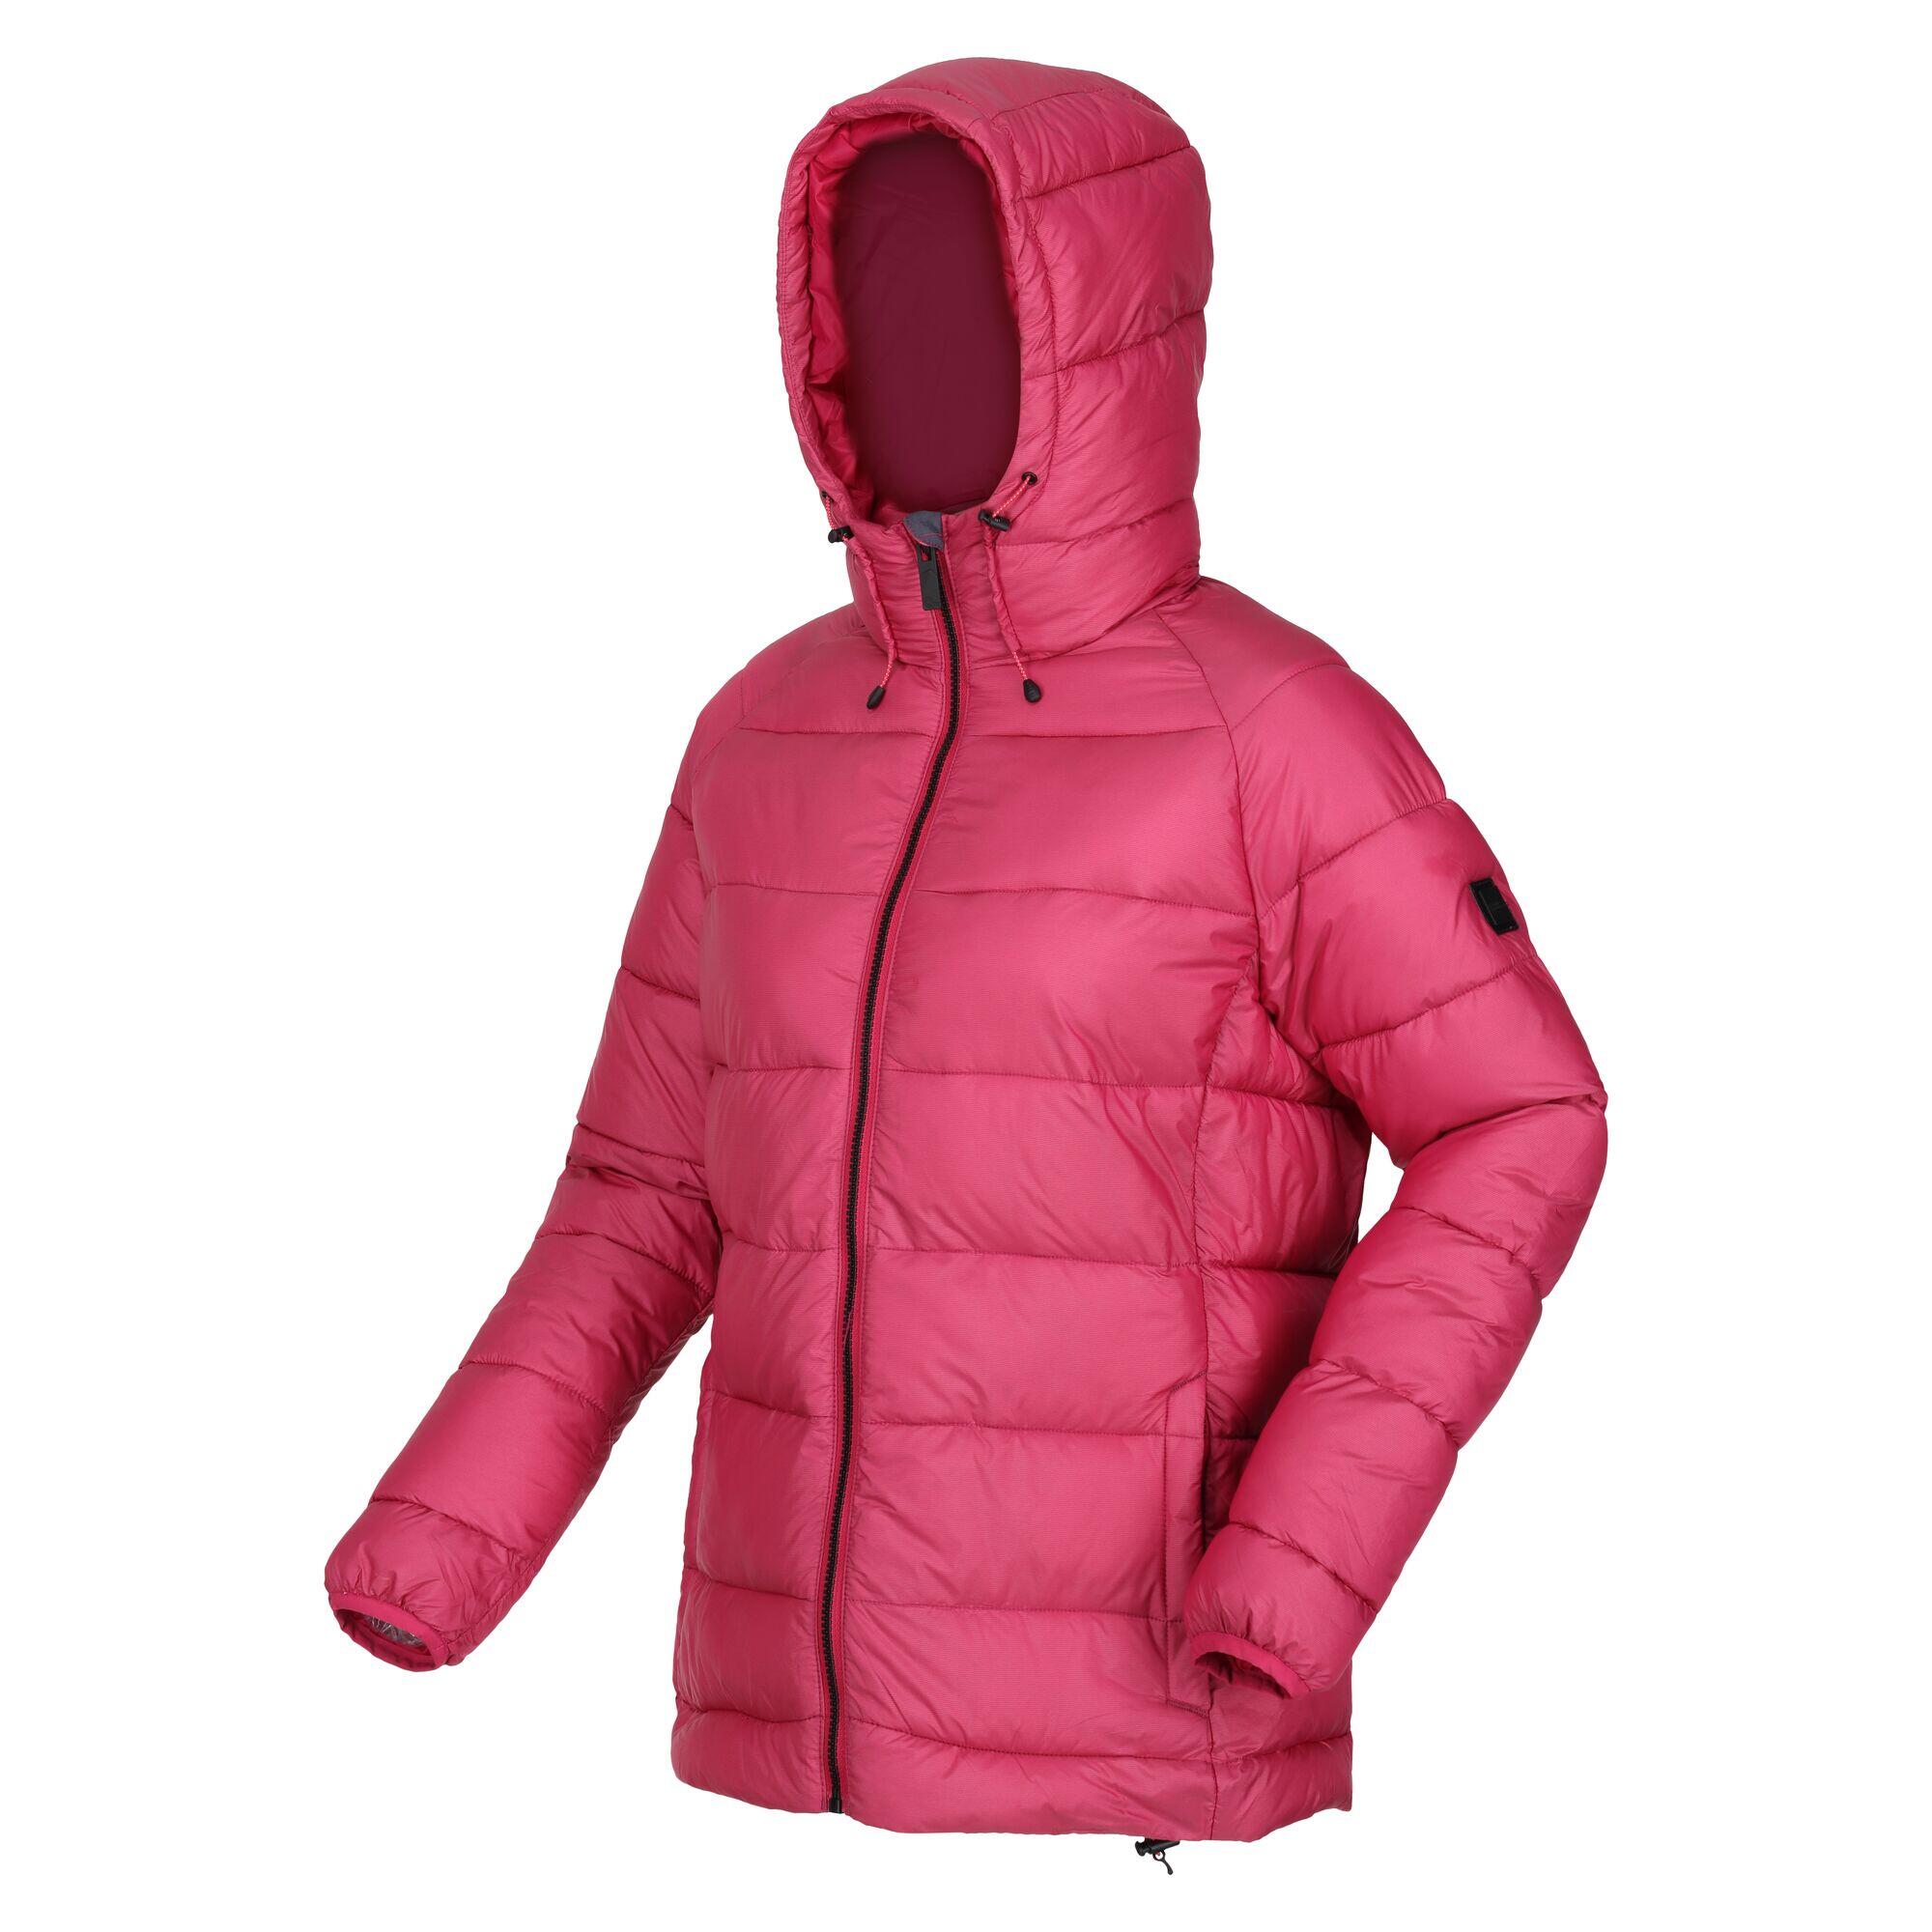 REGATTA Women's Toploft II Hooded Puffer Jacket